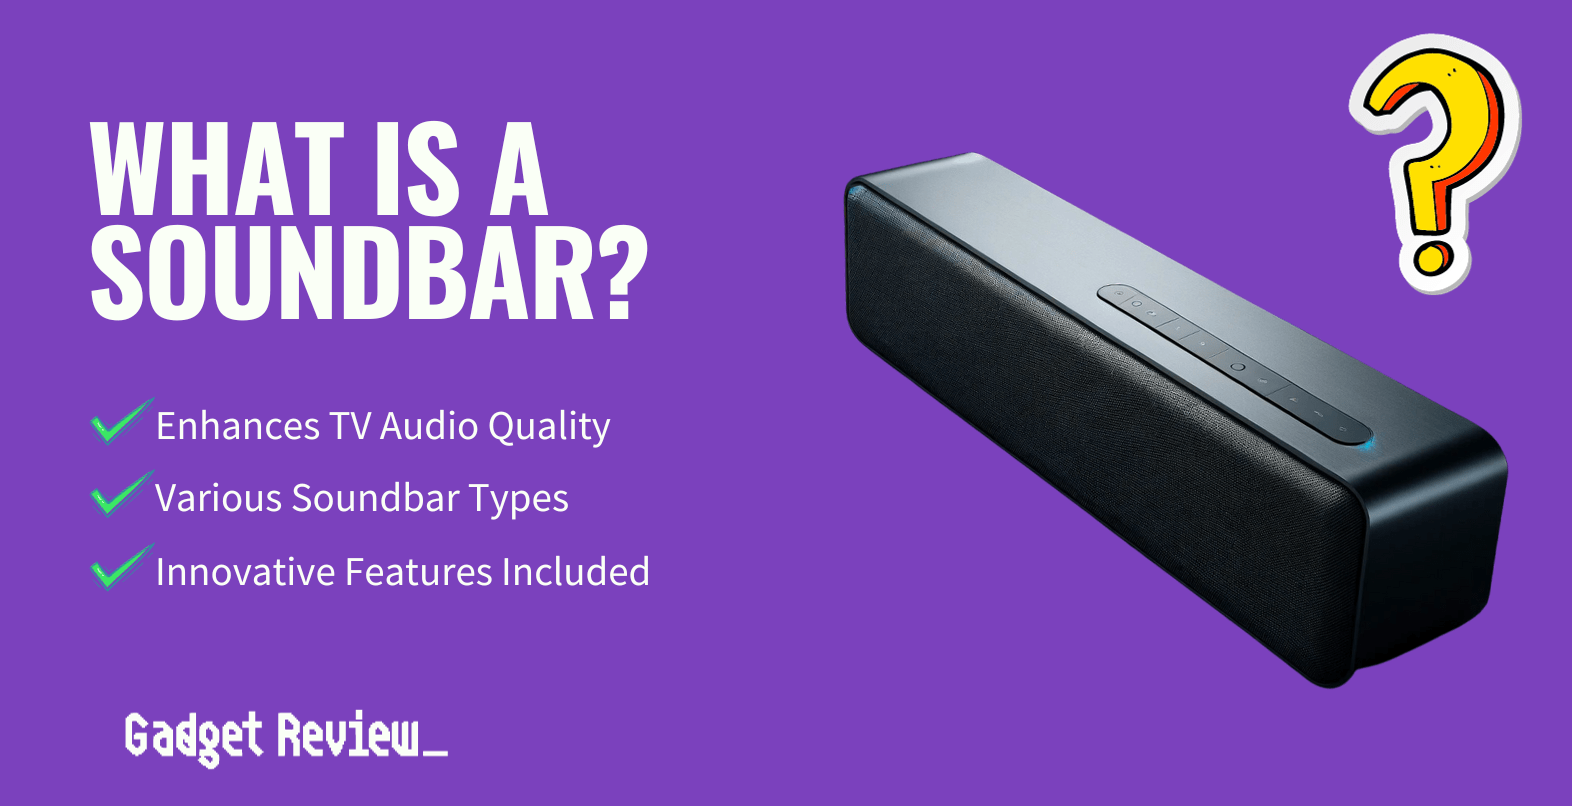 What Is a Soundbar?